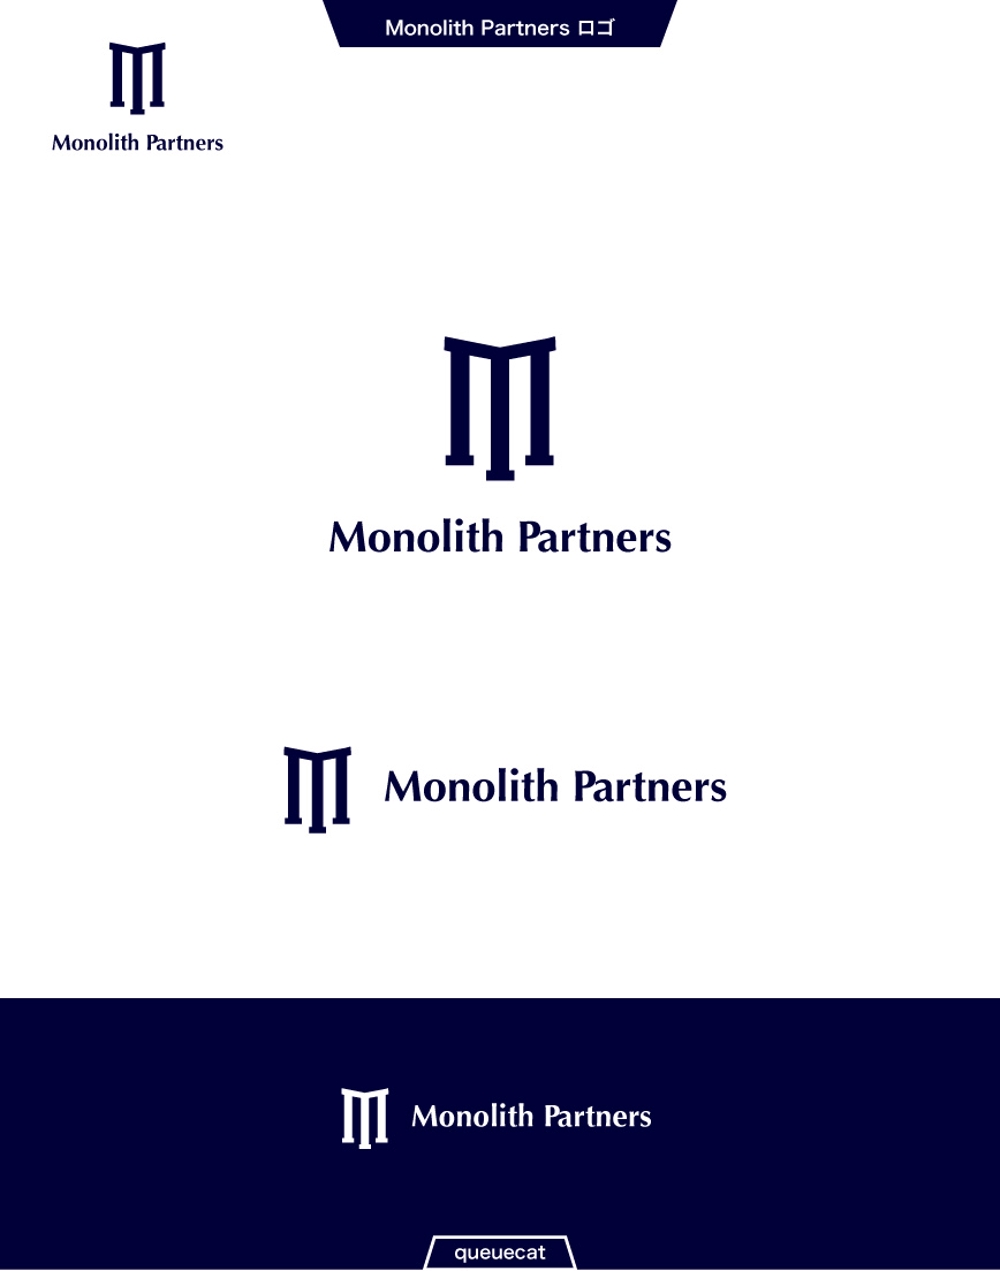 Monolith Partners1_1.jpg